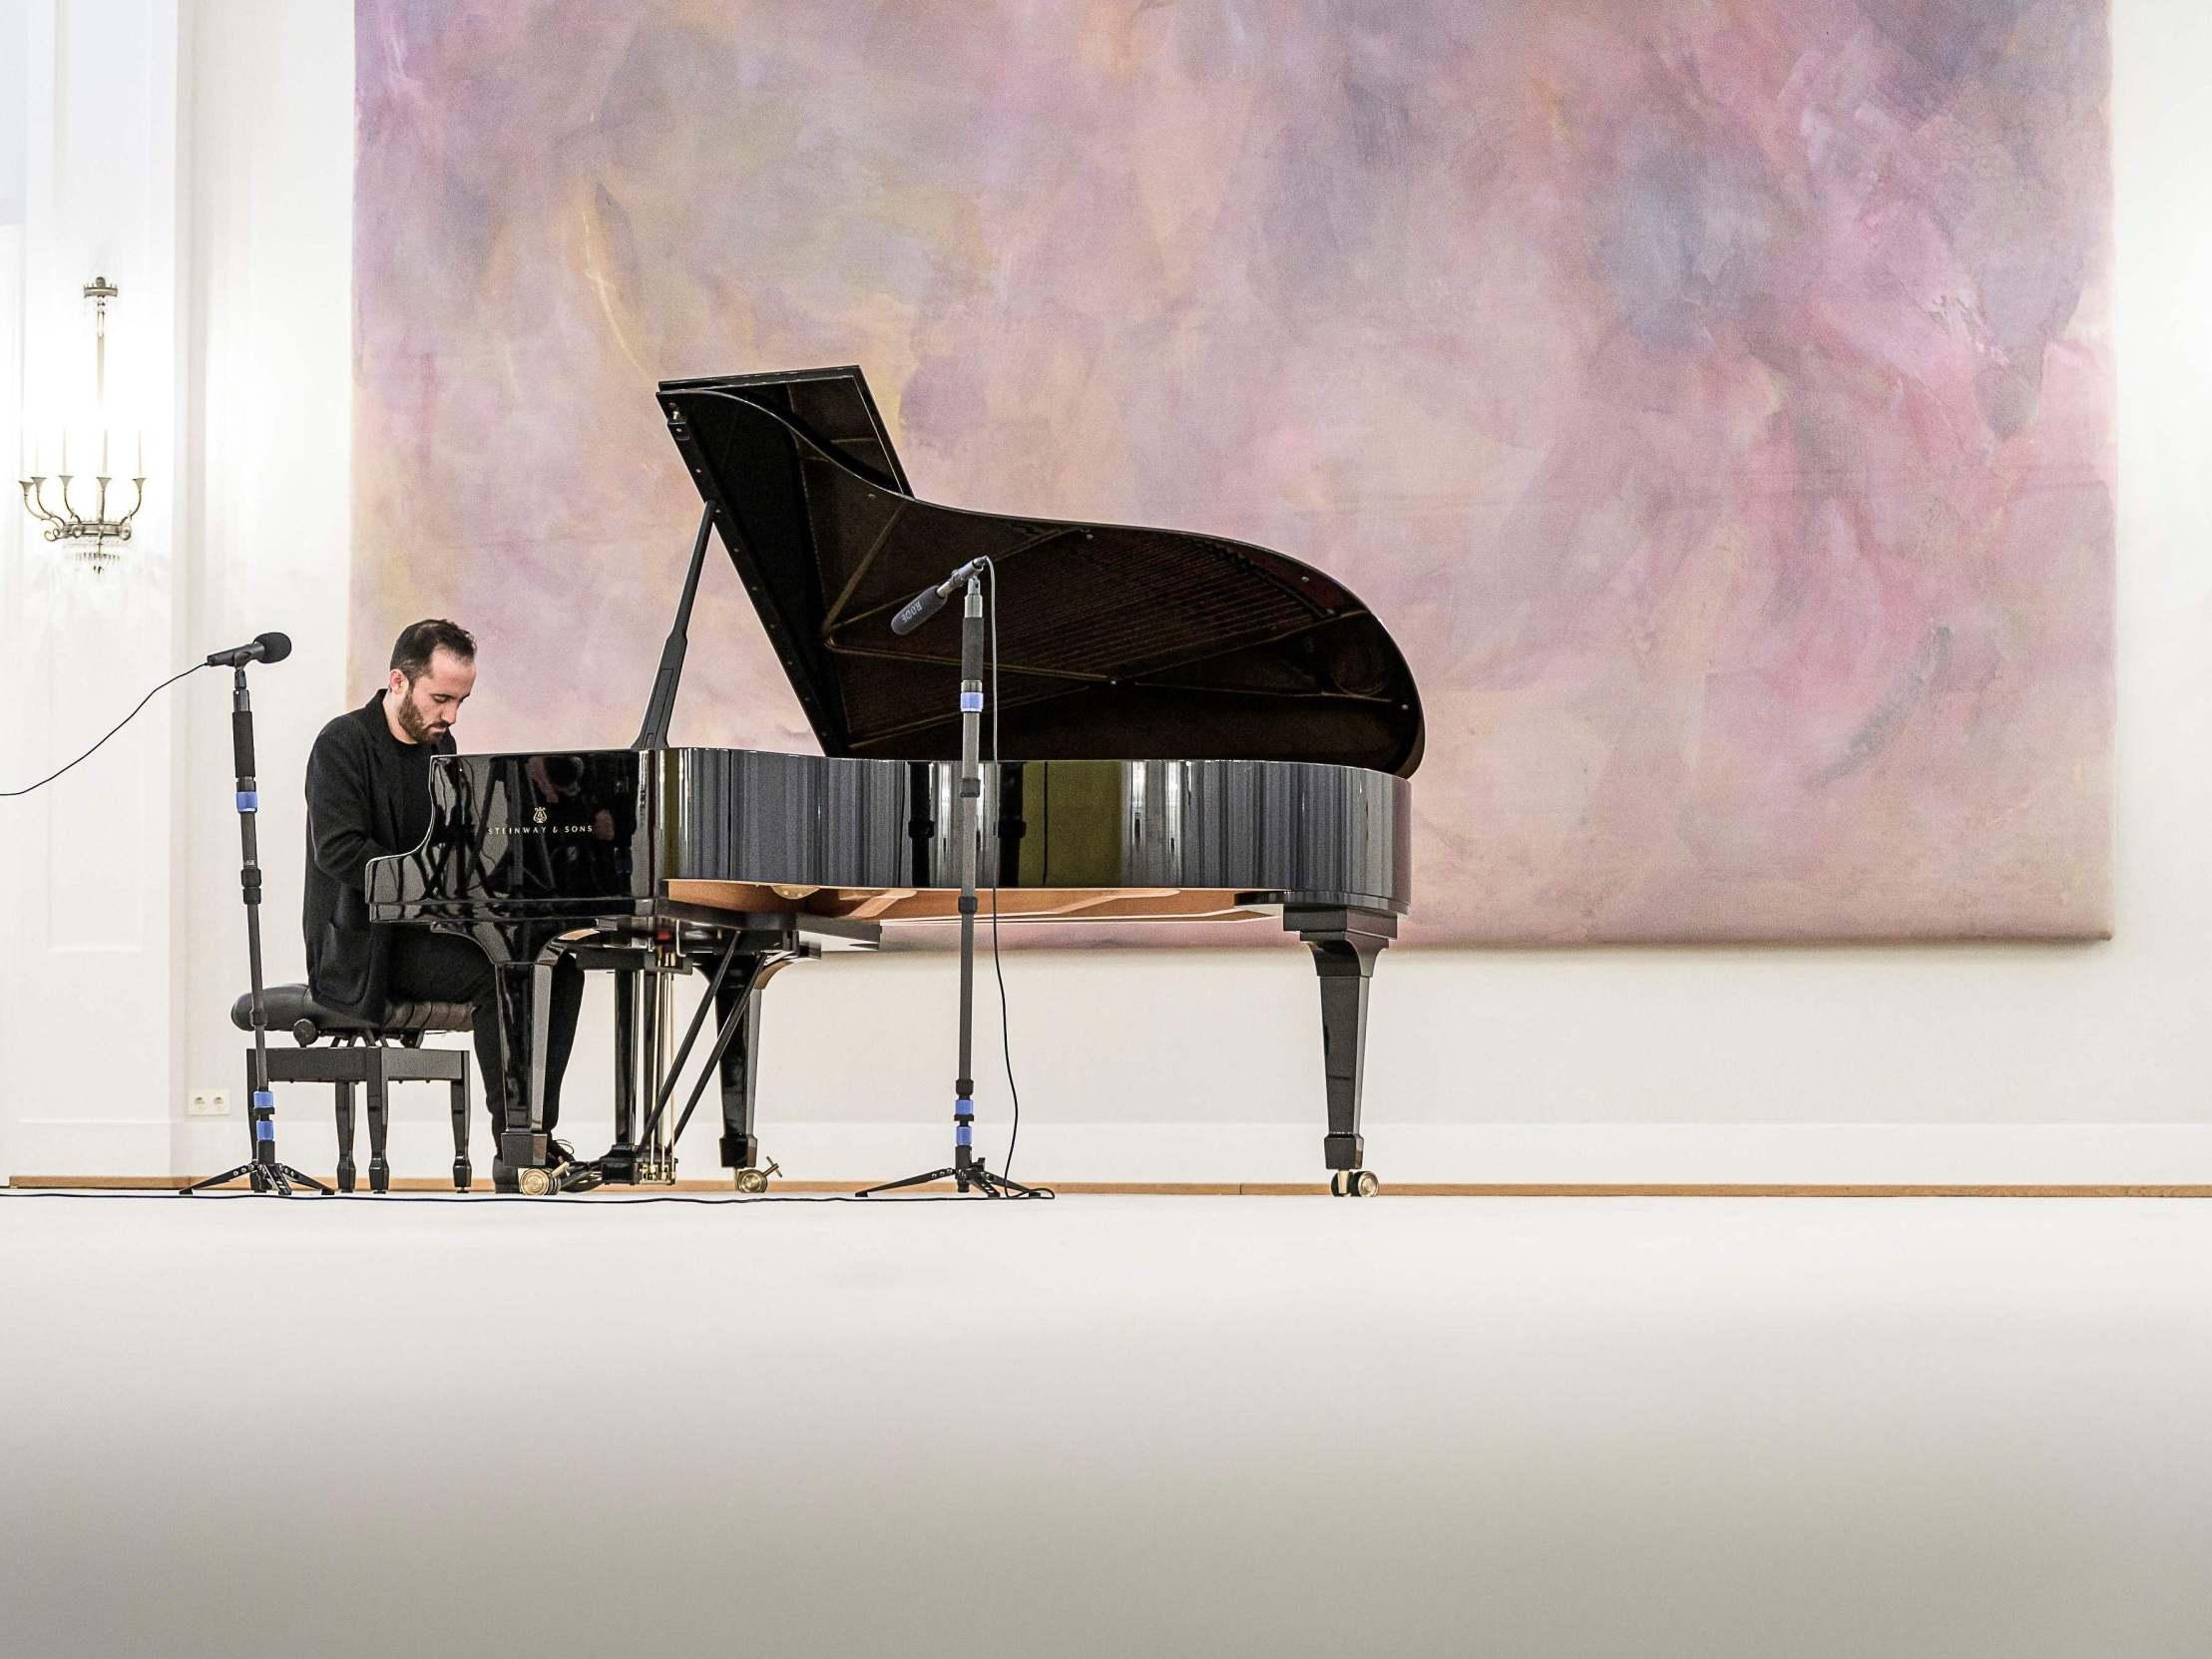 Solo artist: pianist Igor Levit streams from the Schloss Bellevue Presidential Palace, Berlin